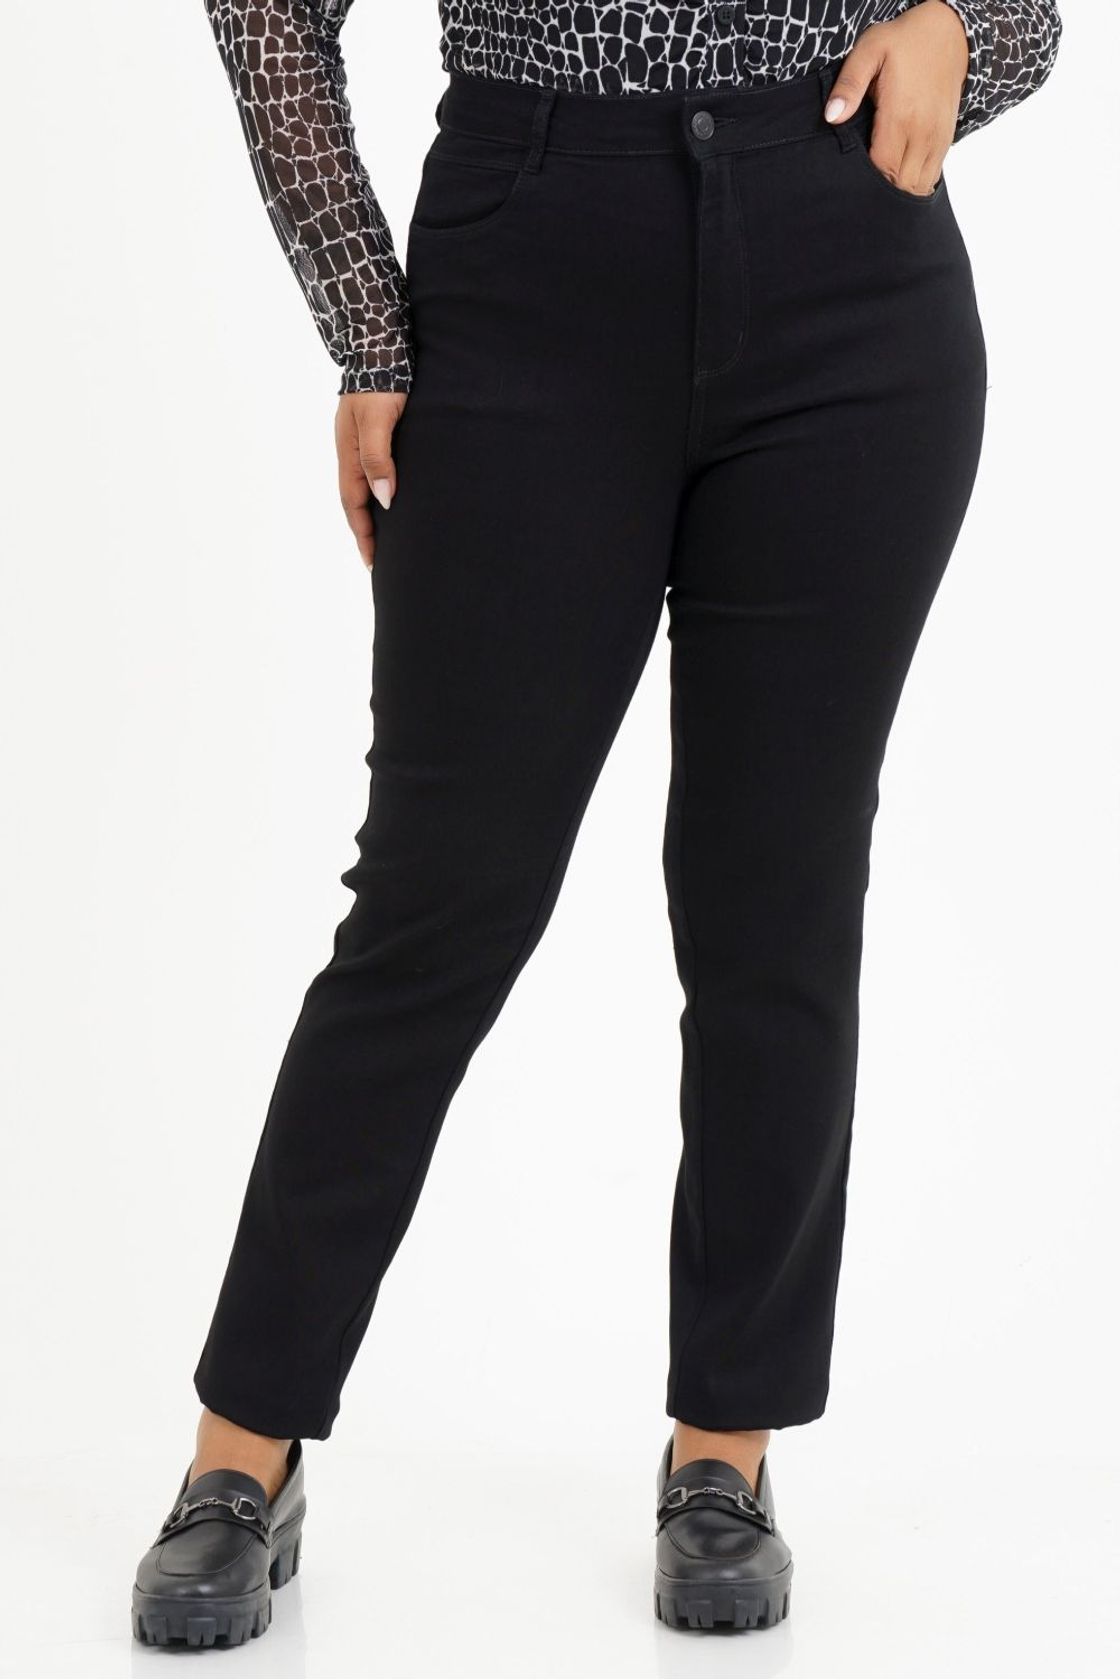 Calça Jegging Plus Size Barequeçaba Jeans - Program Moda